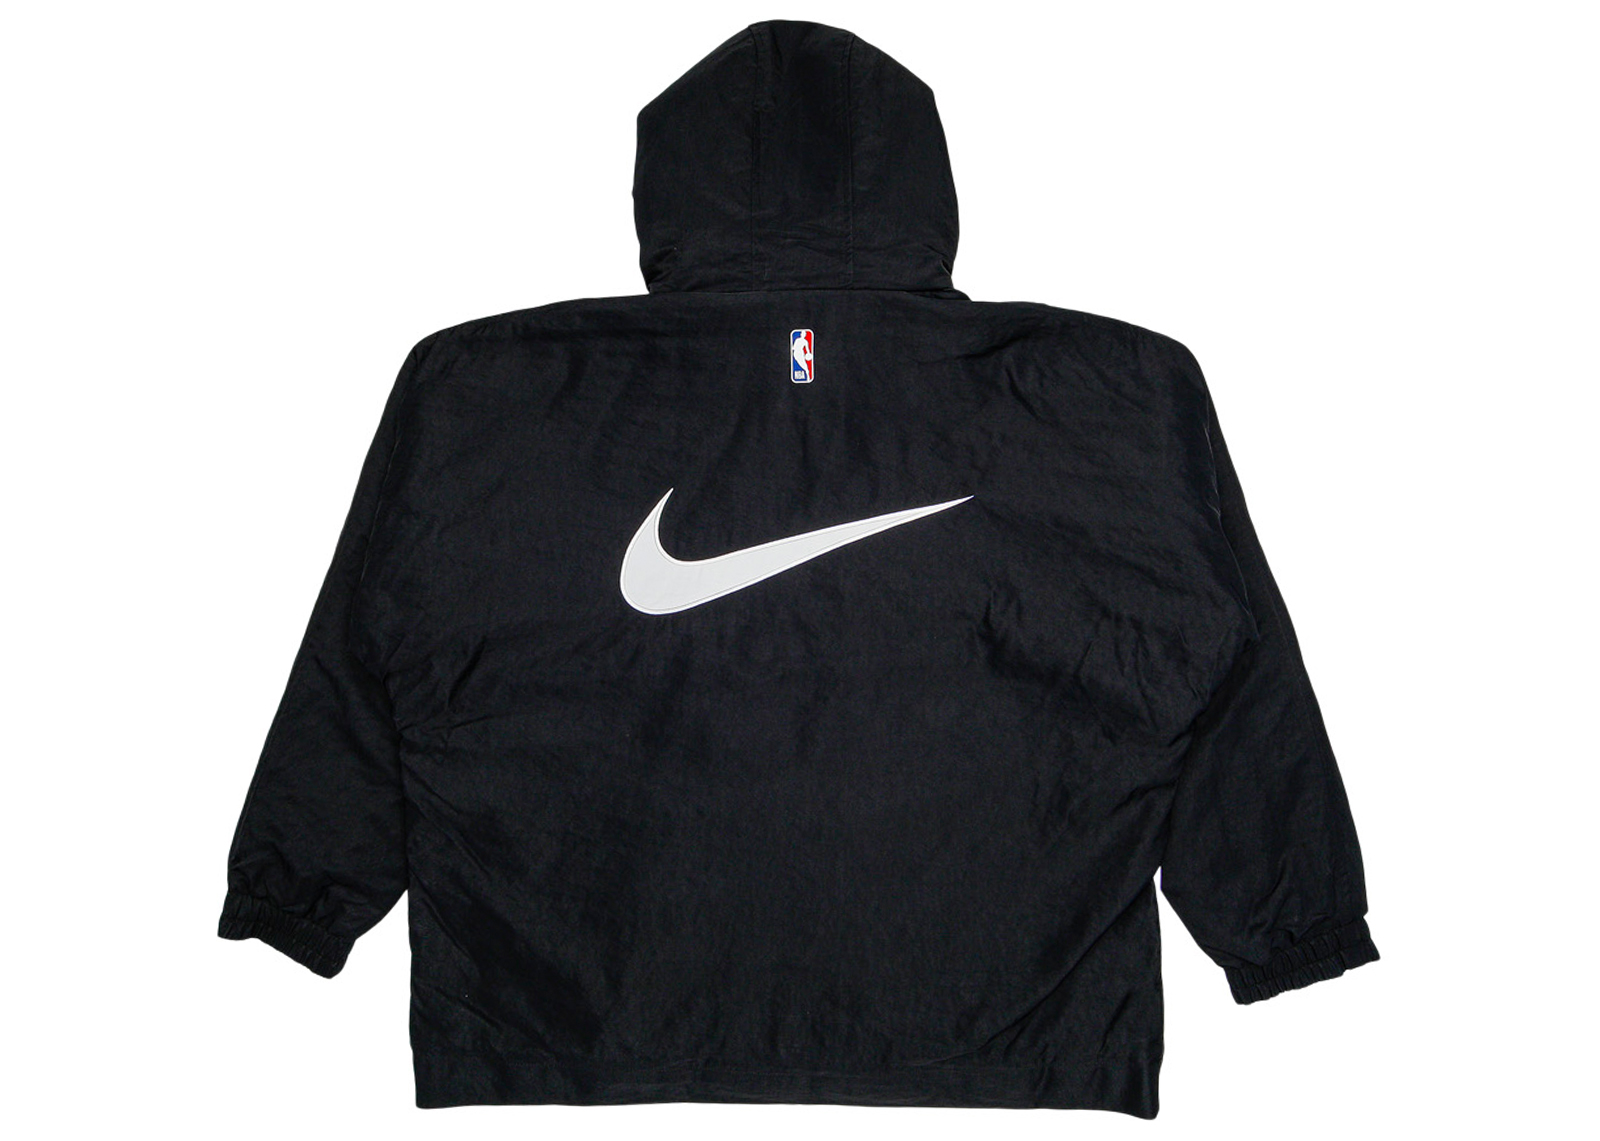 Nike x Ambush NBA Collection Nets Jacket Black/White/Grey - FW20 - US